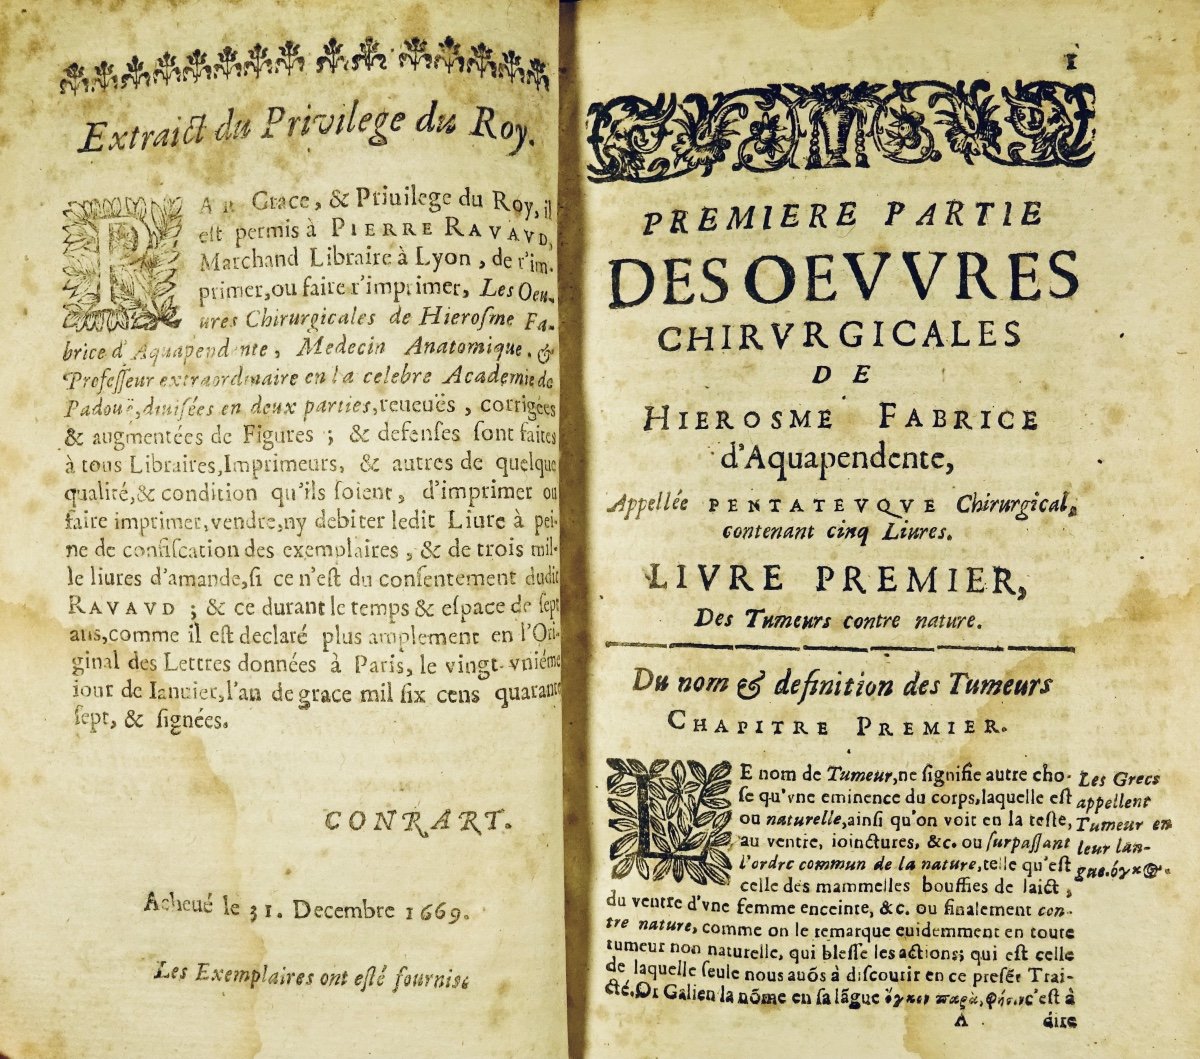 Aquapendente Surgical Works By Hierosme Fabrice d'Aquapendente. Chez Pierre Boyer, 1734.-photo-4